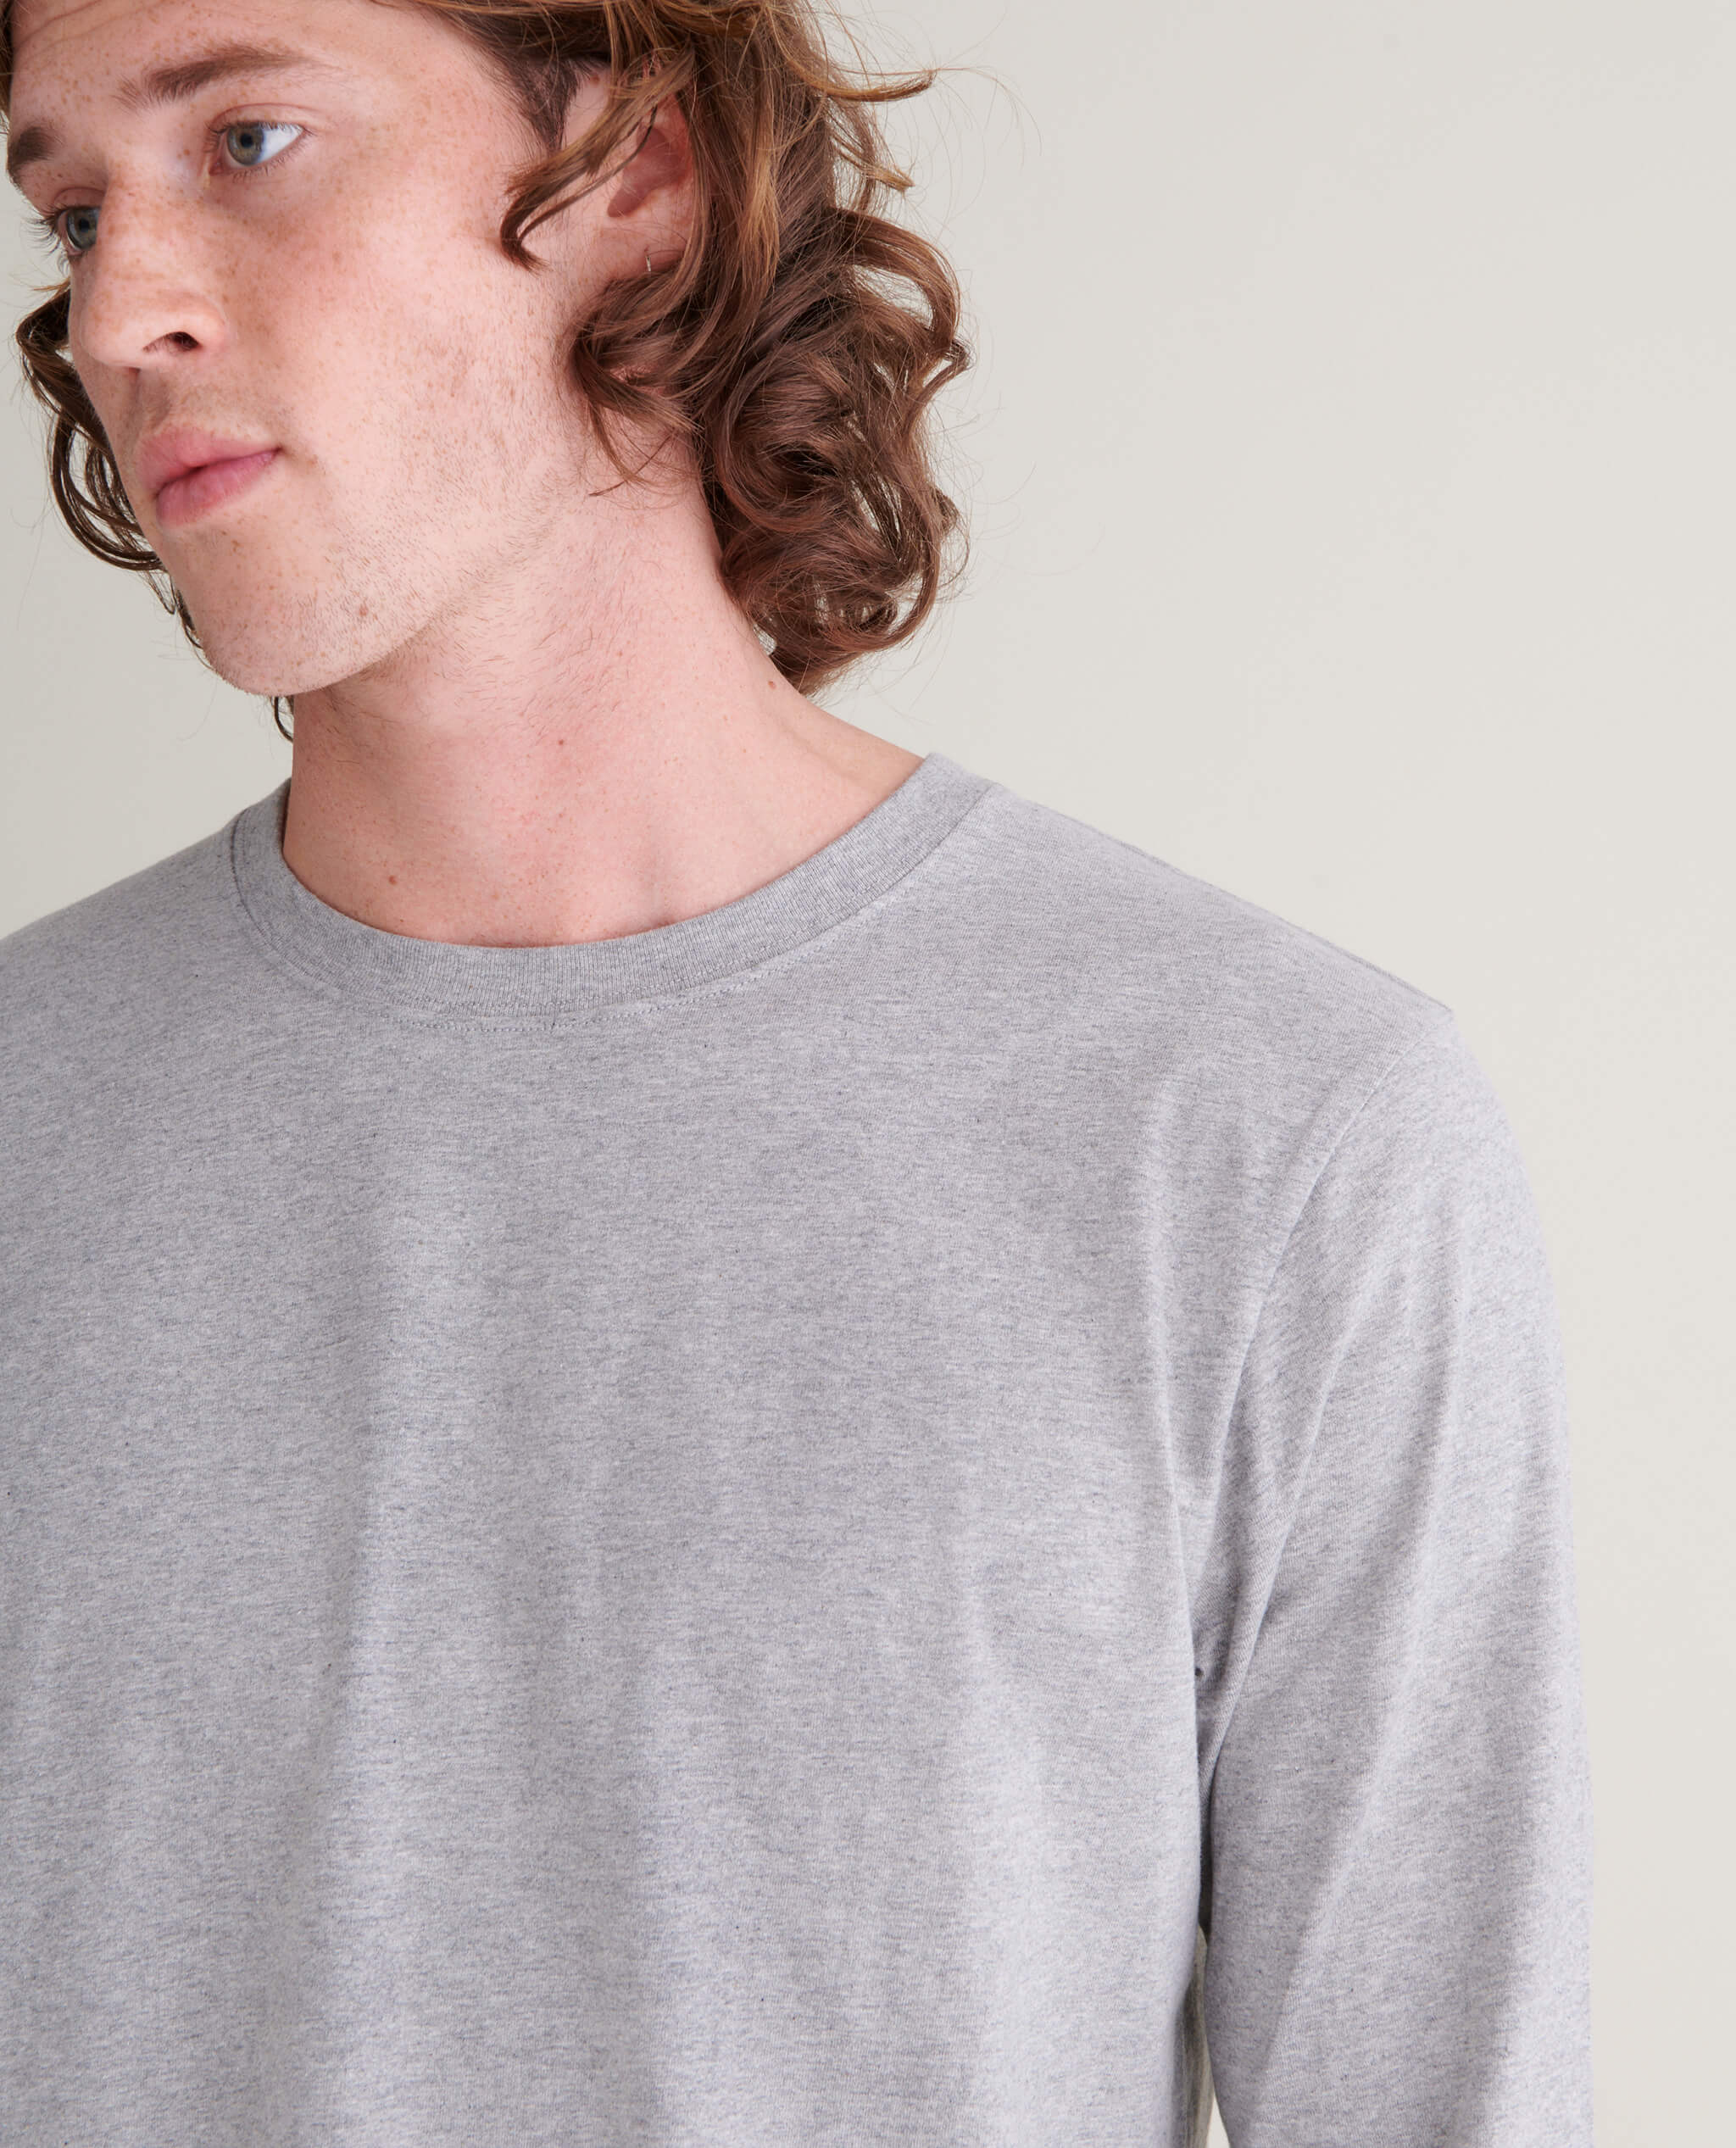 Men's Cotton Crewneck Long Sleeved T-Shirt